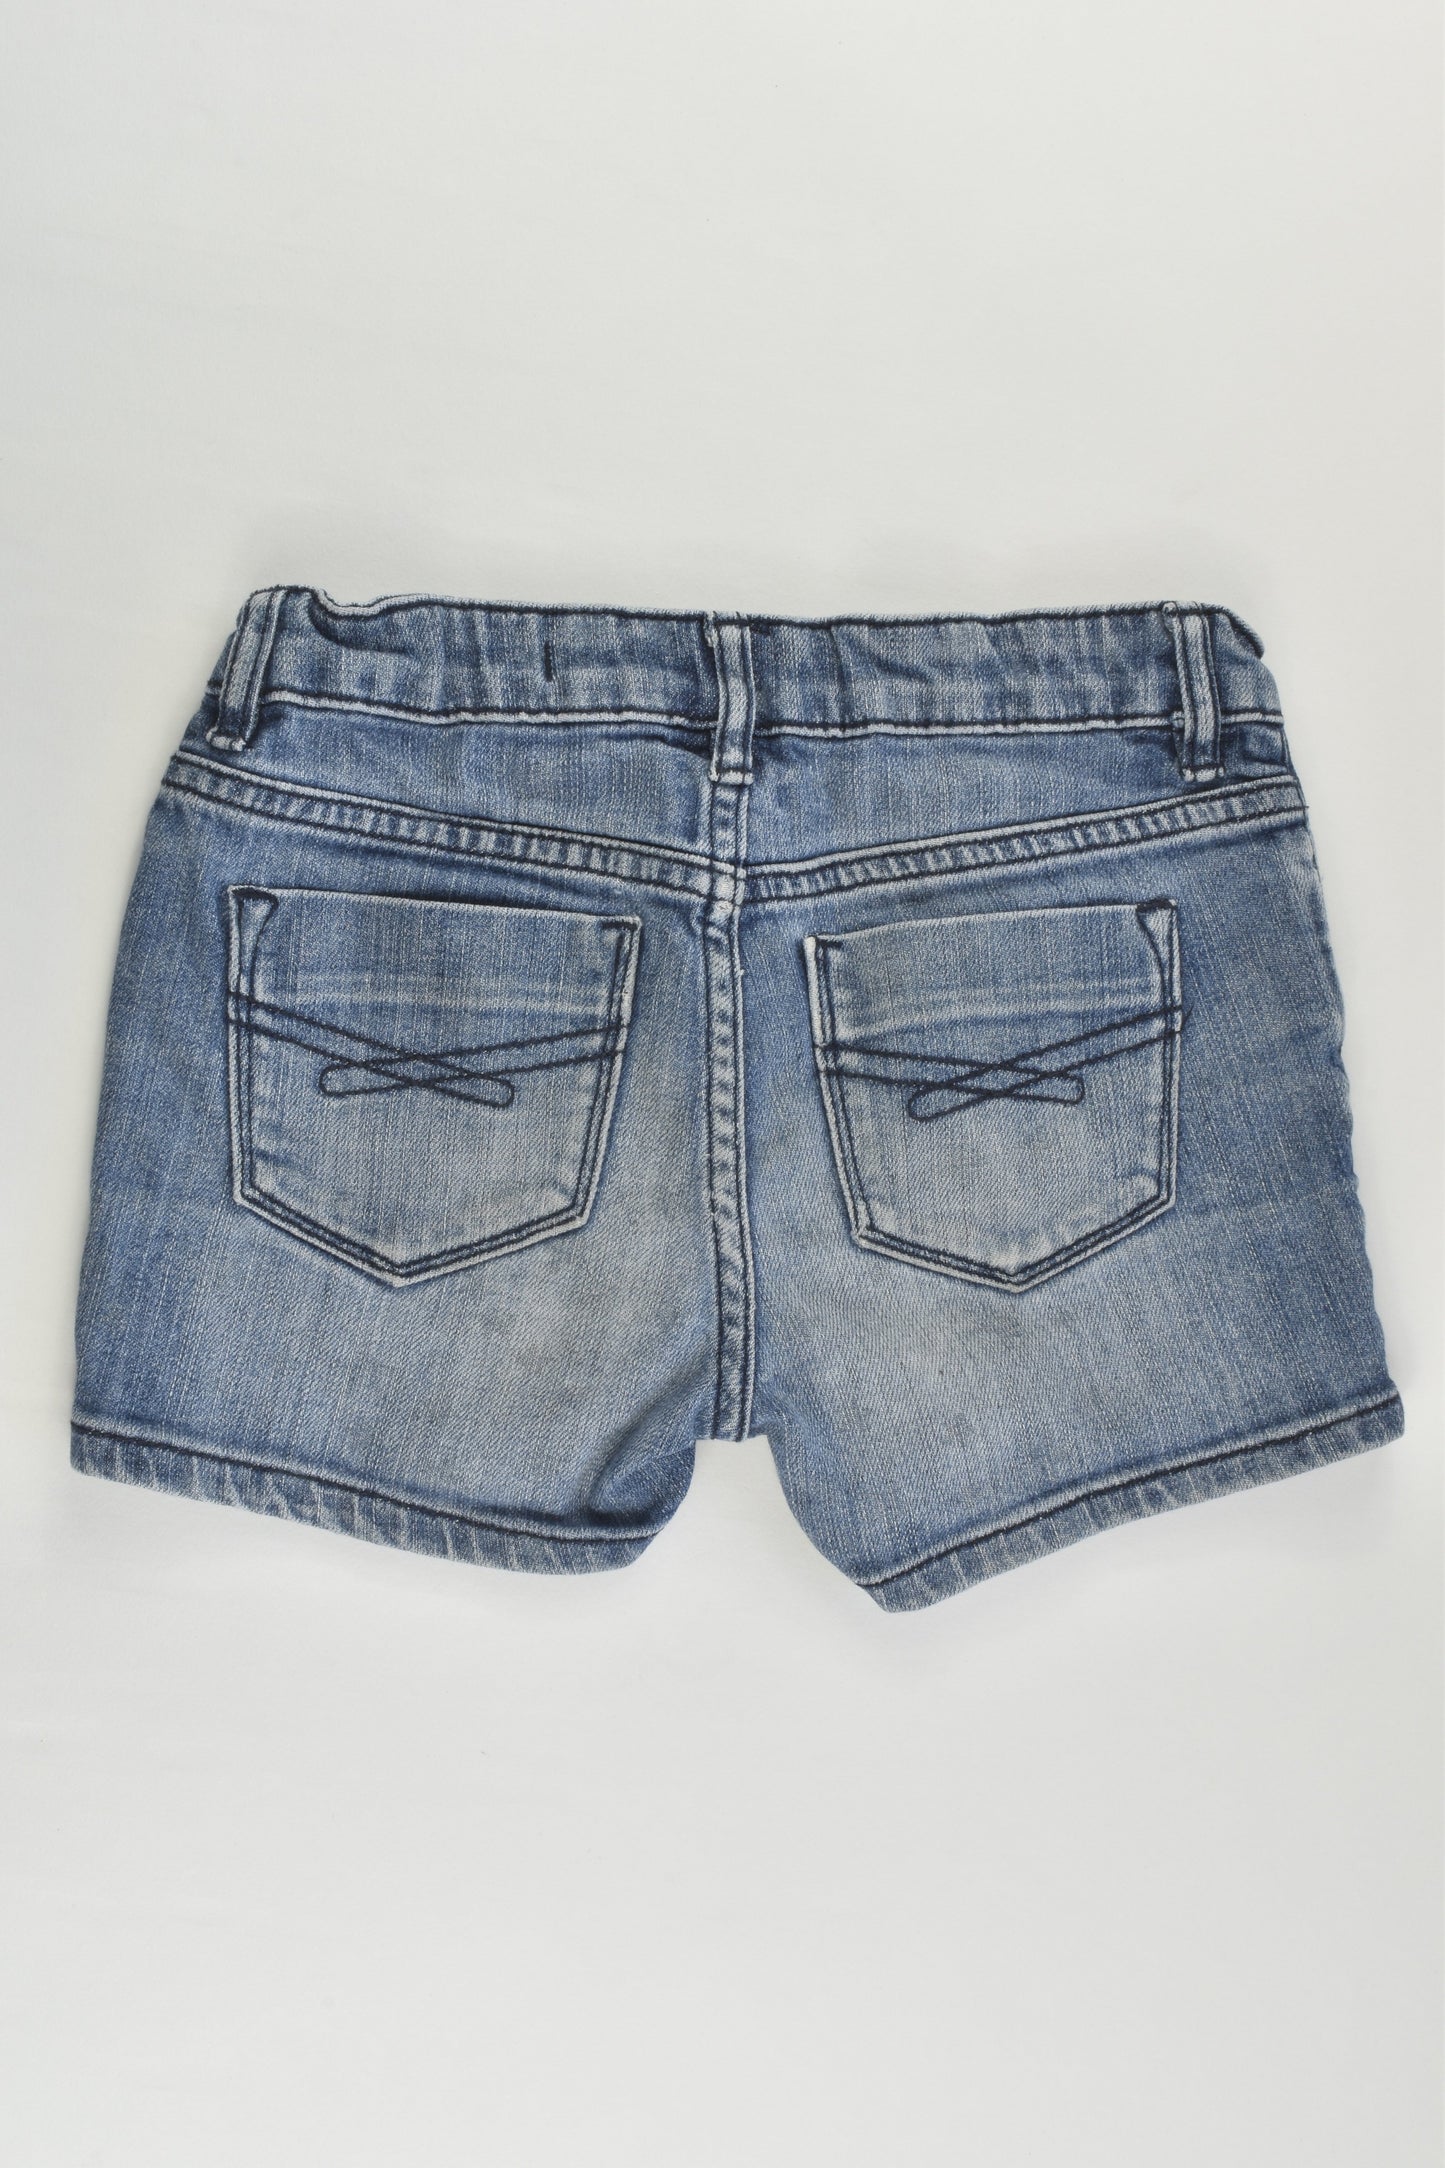 Gap Kids Size 7 Regular Fit Denim Shorts